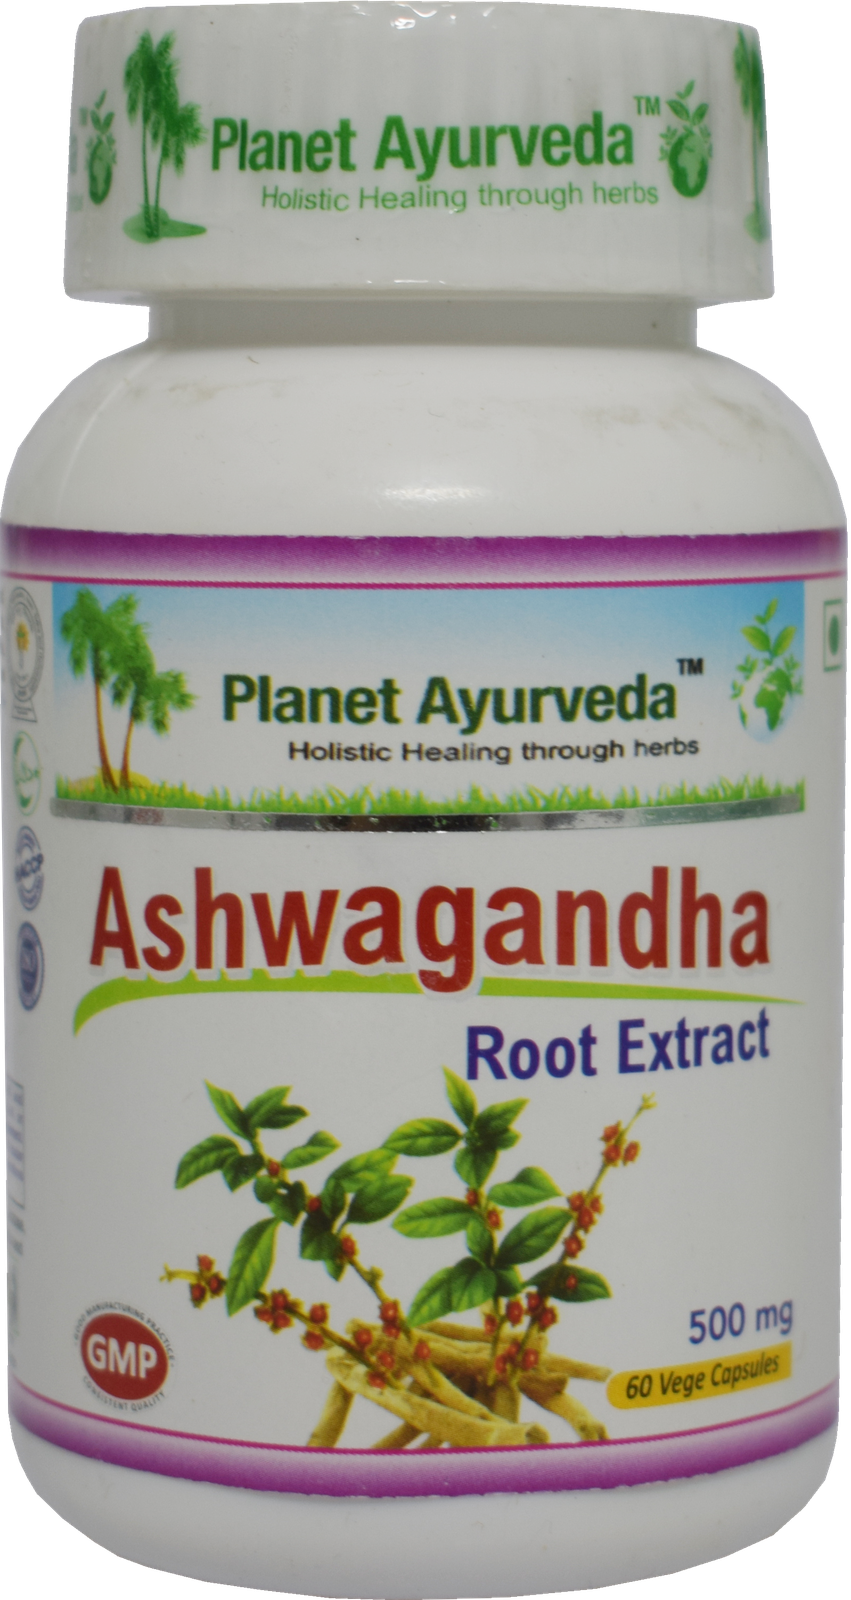 Buy Planet Ayurveda Ashwagandha Capsule at Best Price Online